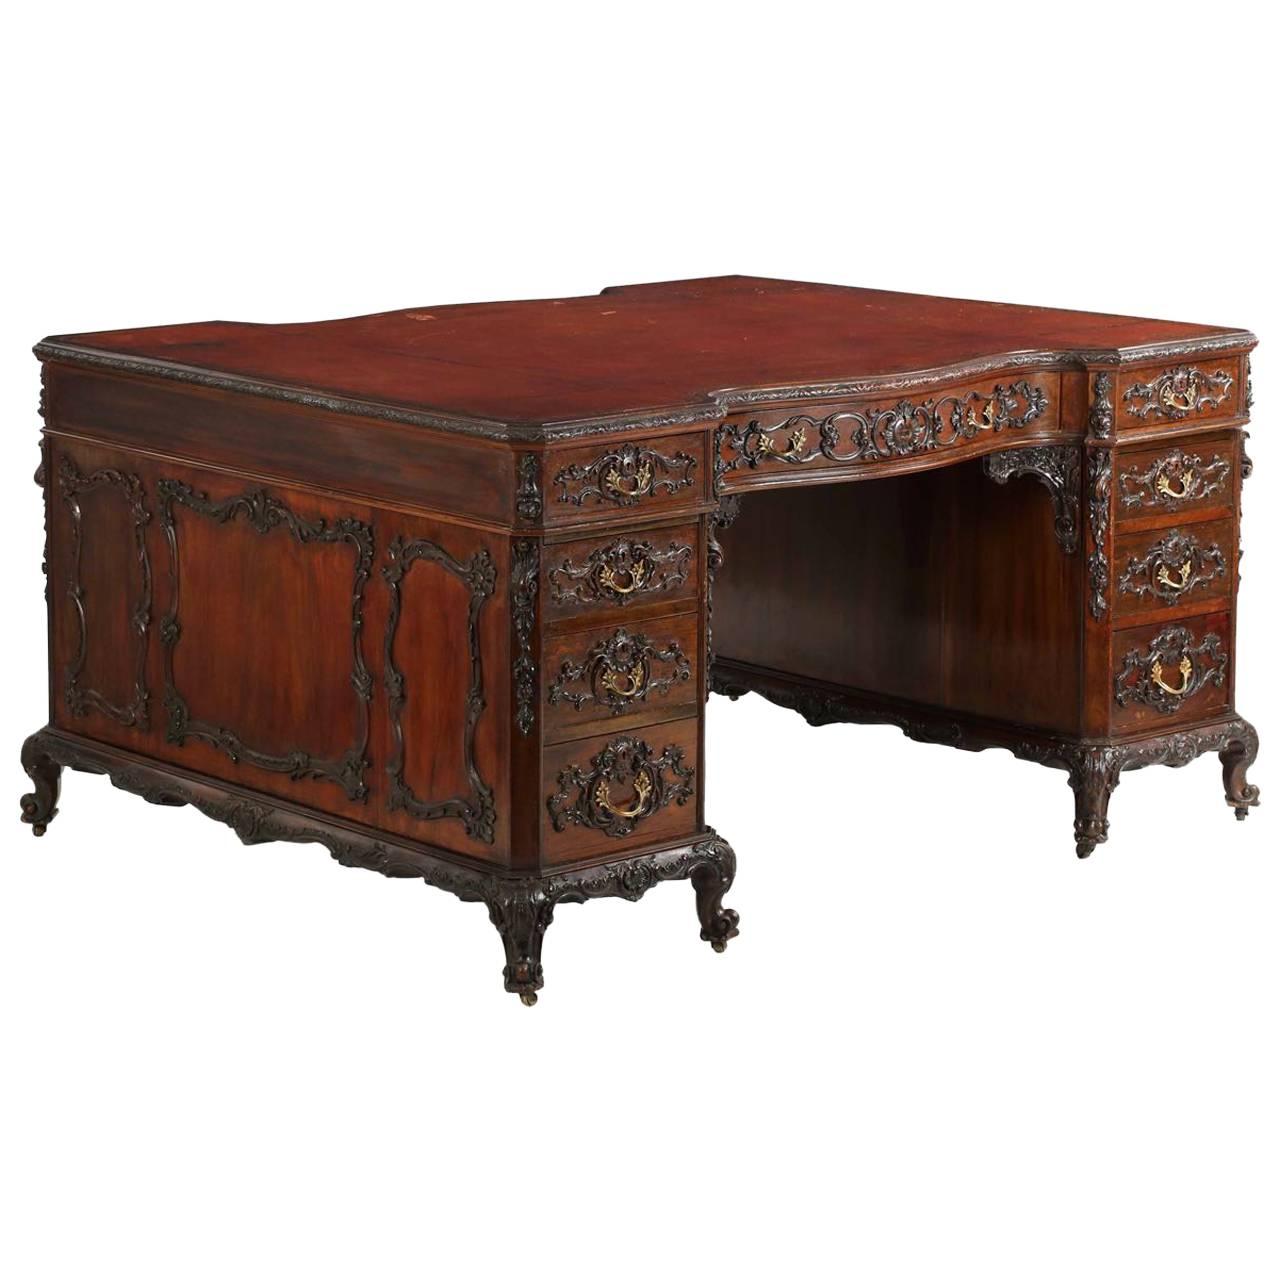 Exceptional Rococo Revival Mahogany Partner's Desk, Bertram and Sons, circa 1880